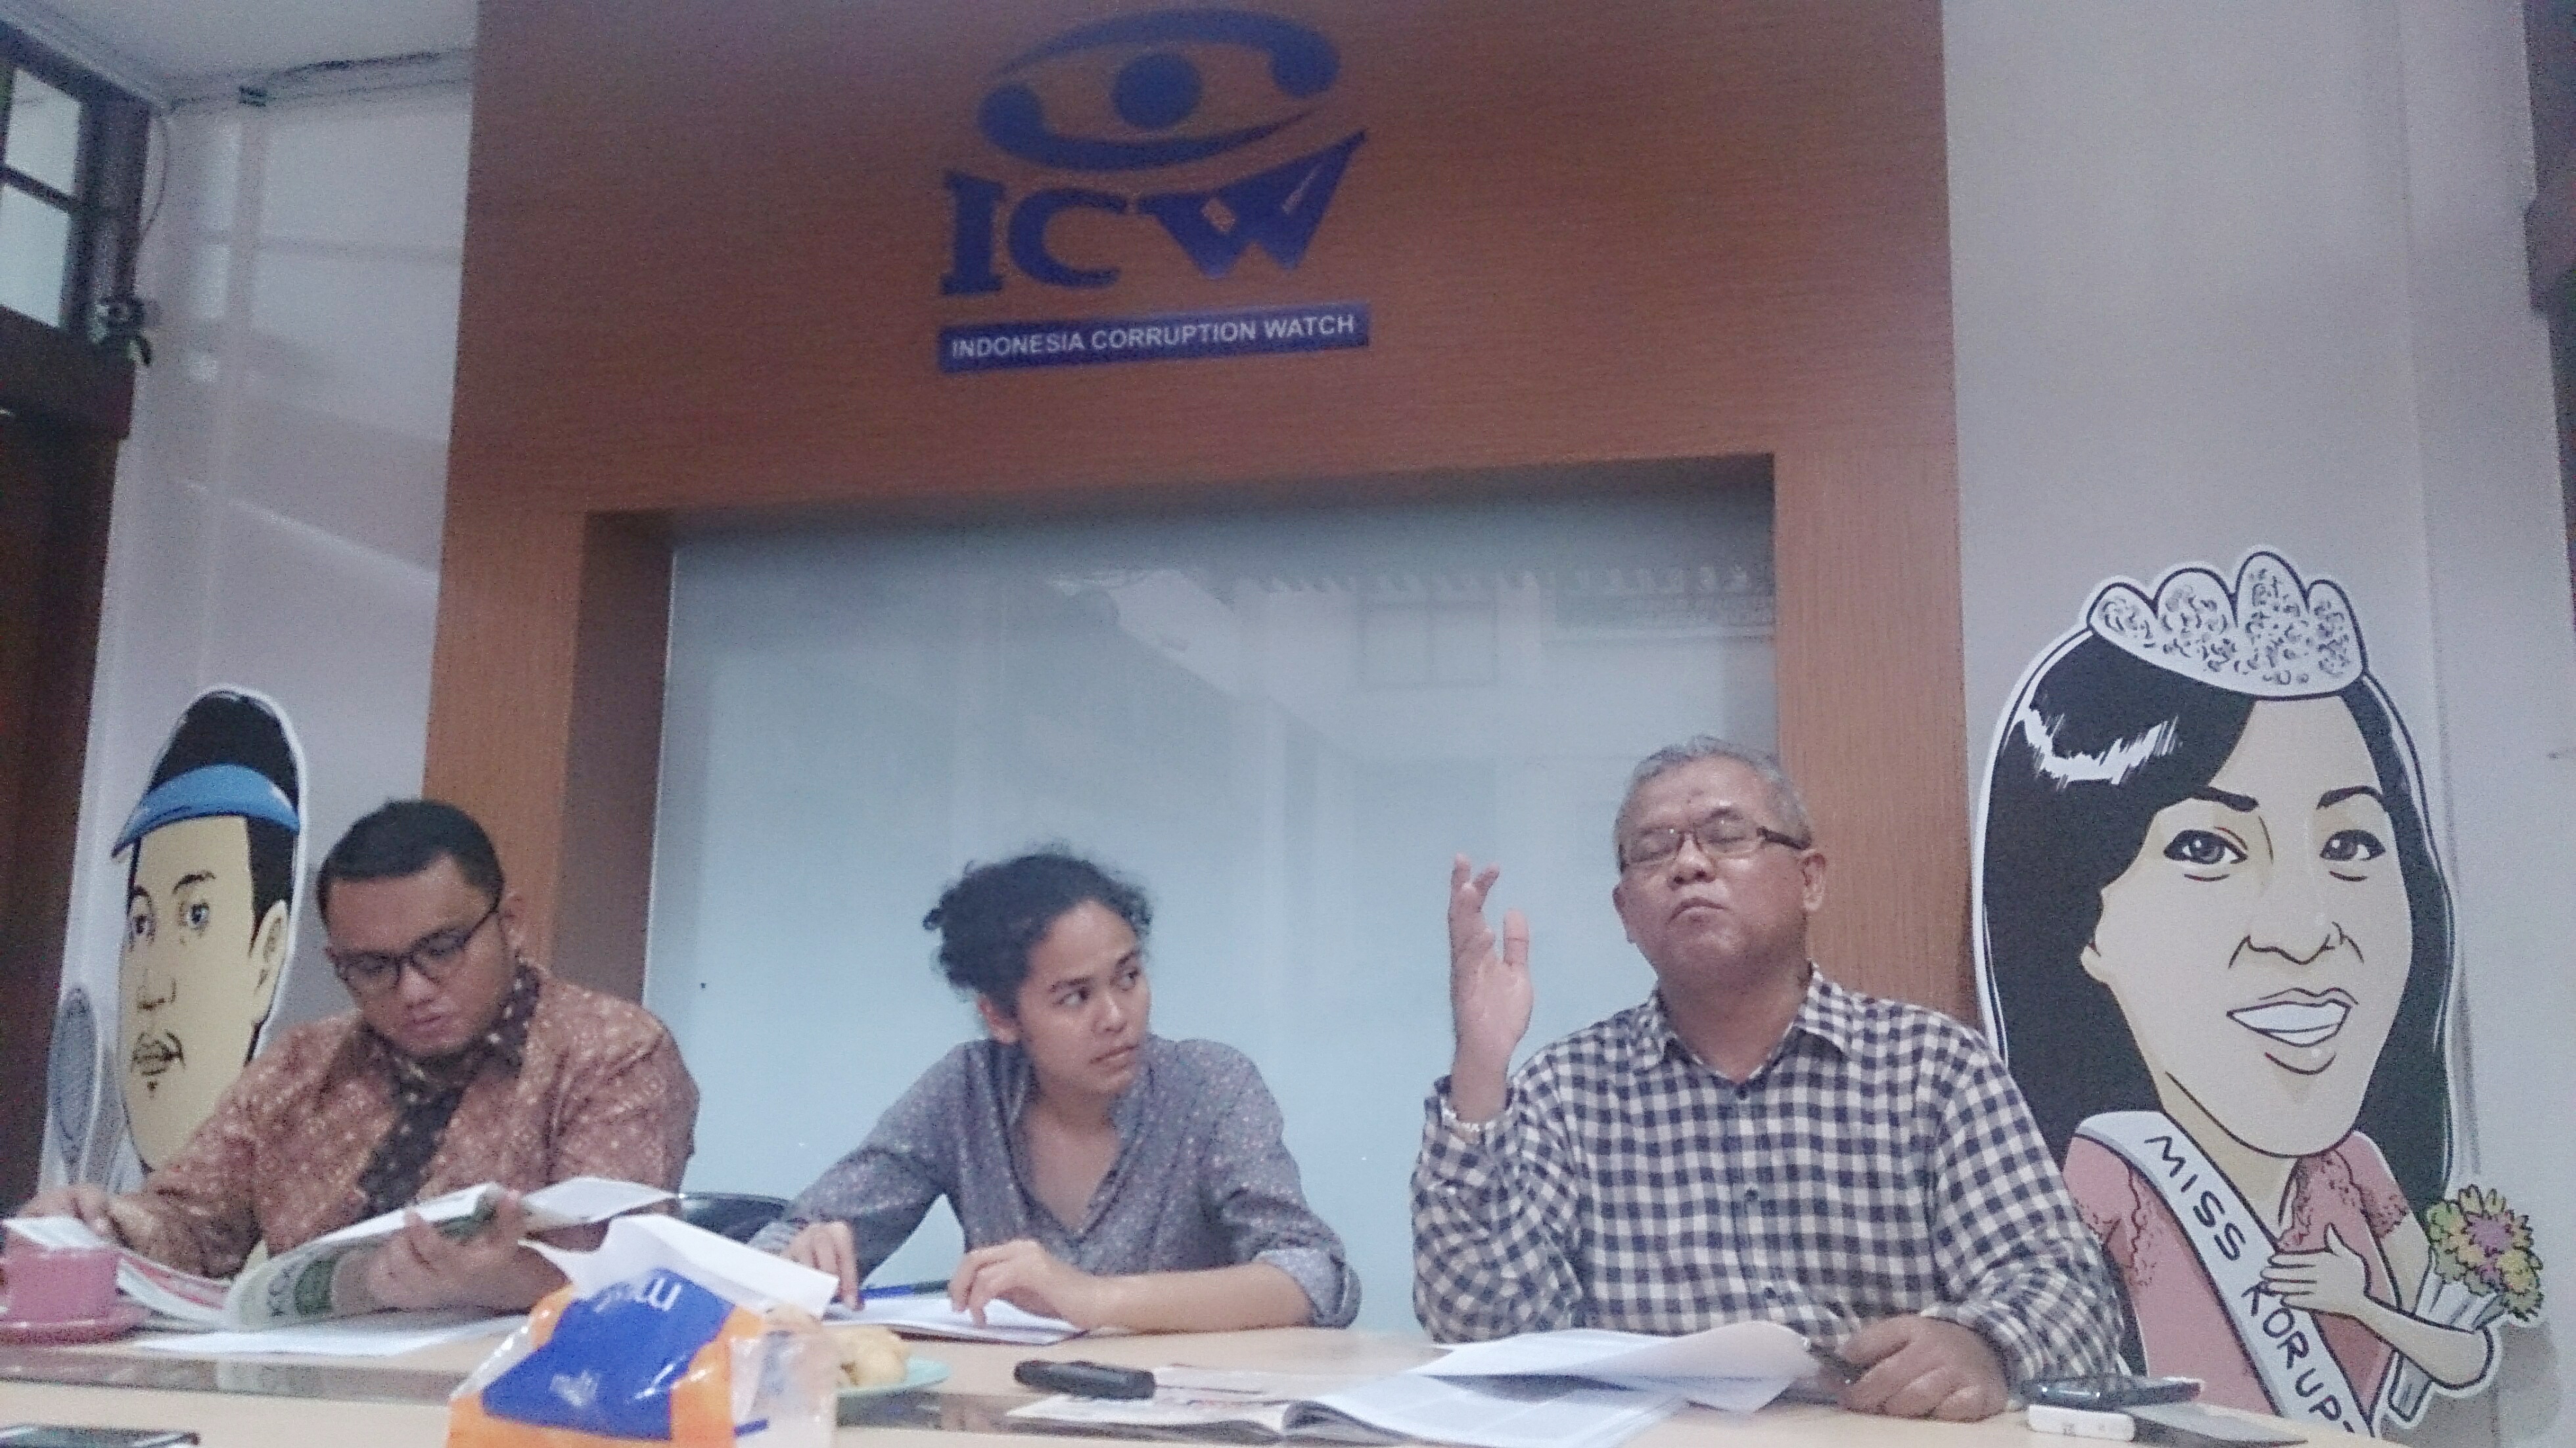 (Dari Kiri ke Kanan) Ketua Pemuda Muhammadiyah Dahnil Anzar, Aktivis ICW Lola Esther dan Dosen FH Trisakti Abdul Fickar Hadjar saat diskusi di kantor ICW, Jakarta, Senin (6/4). Foto: RIA